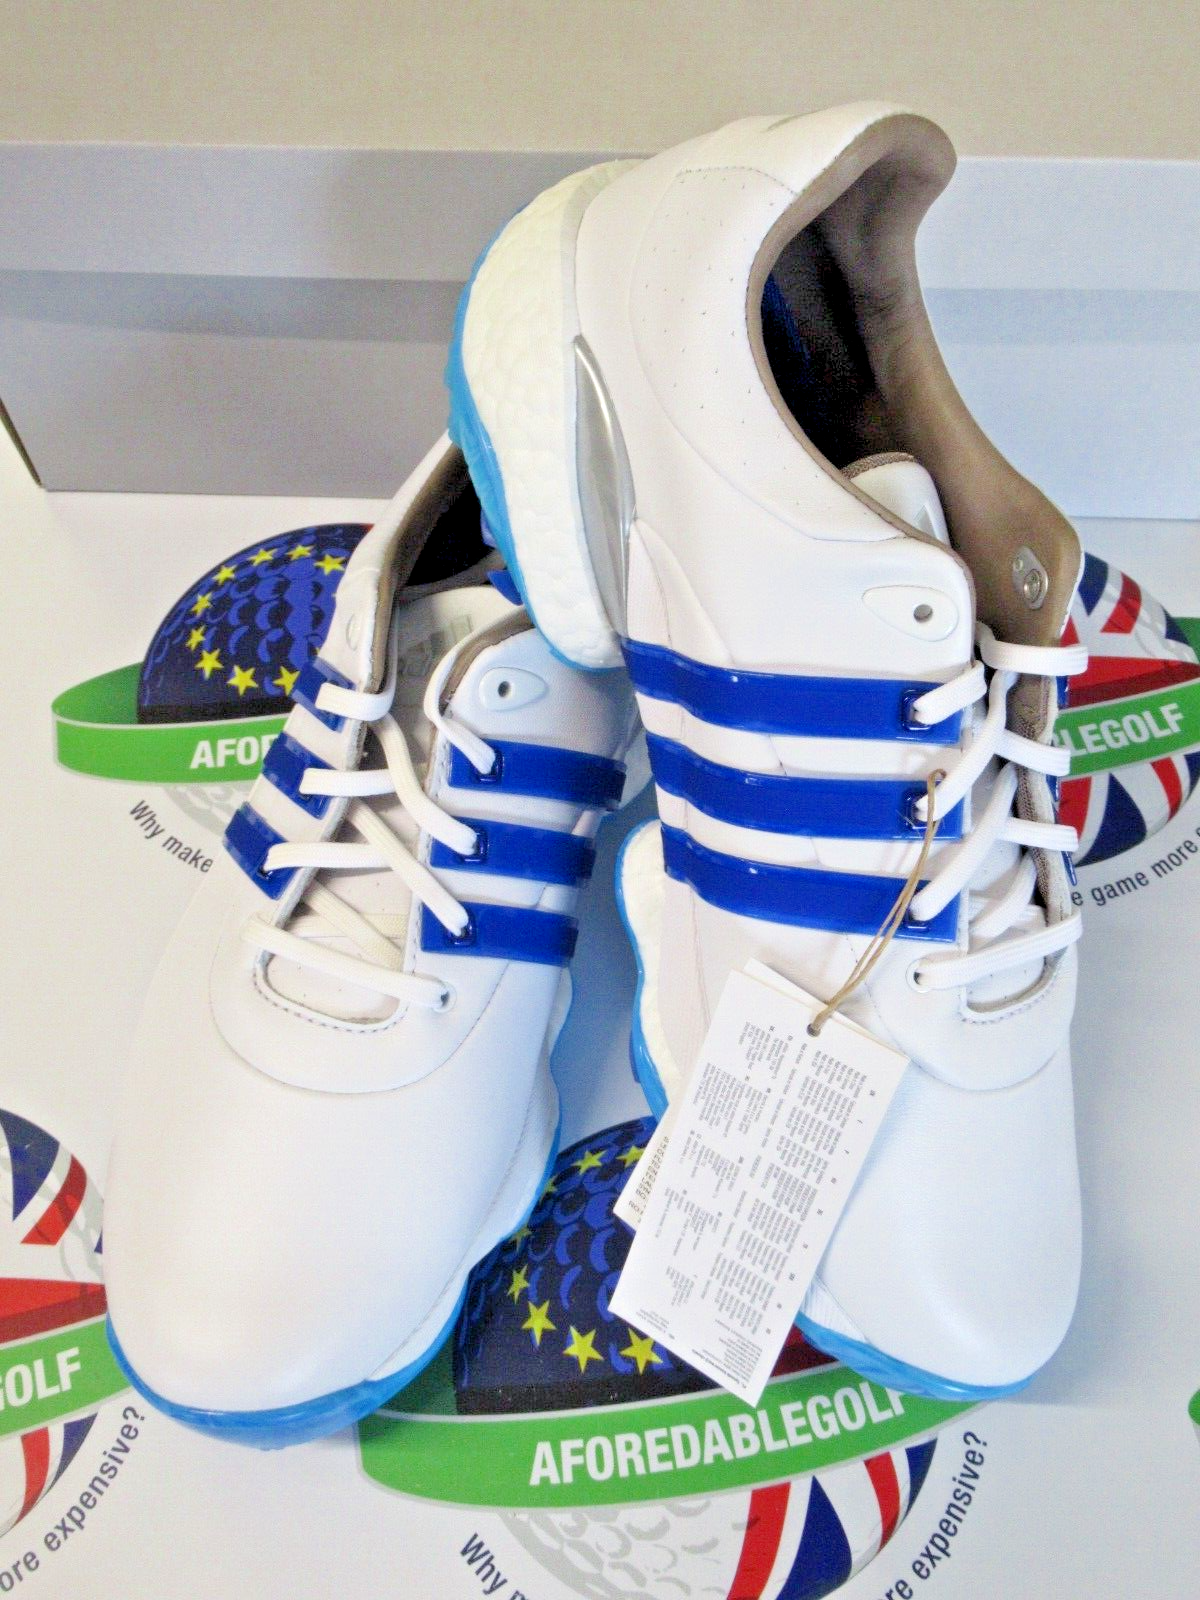 adidas tour 360 22 waterproof golf shoes white/blue uk size 7.5